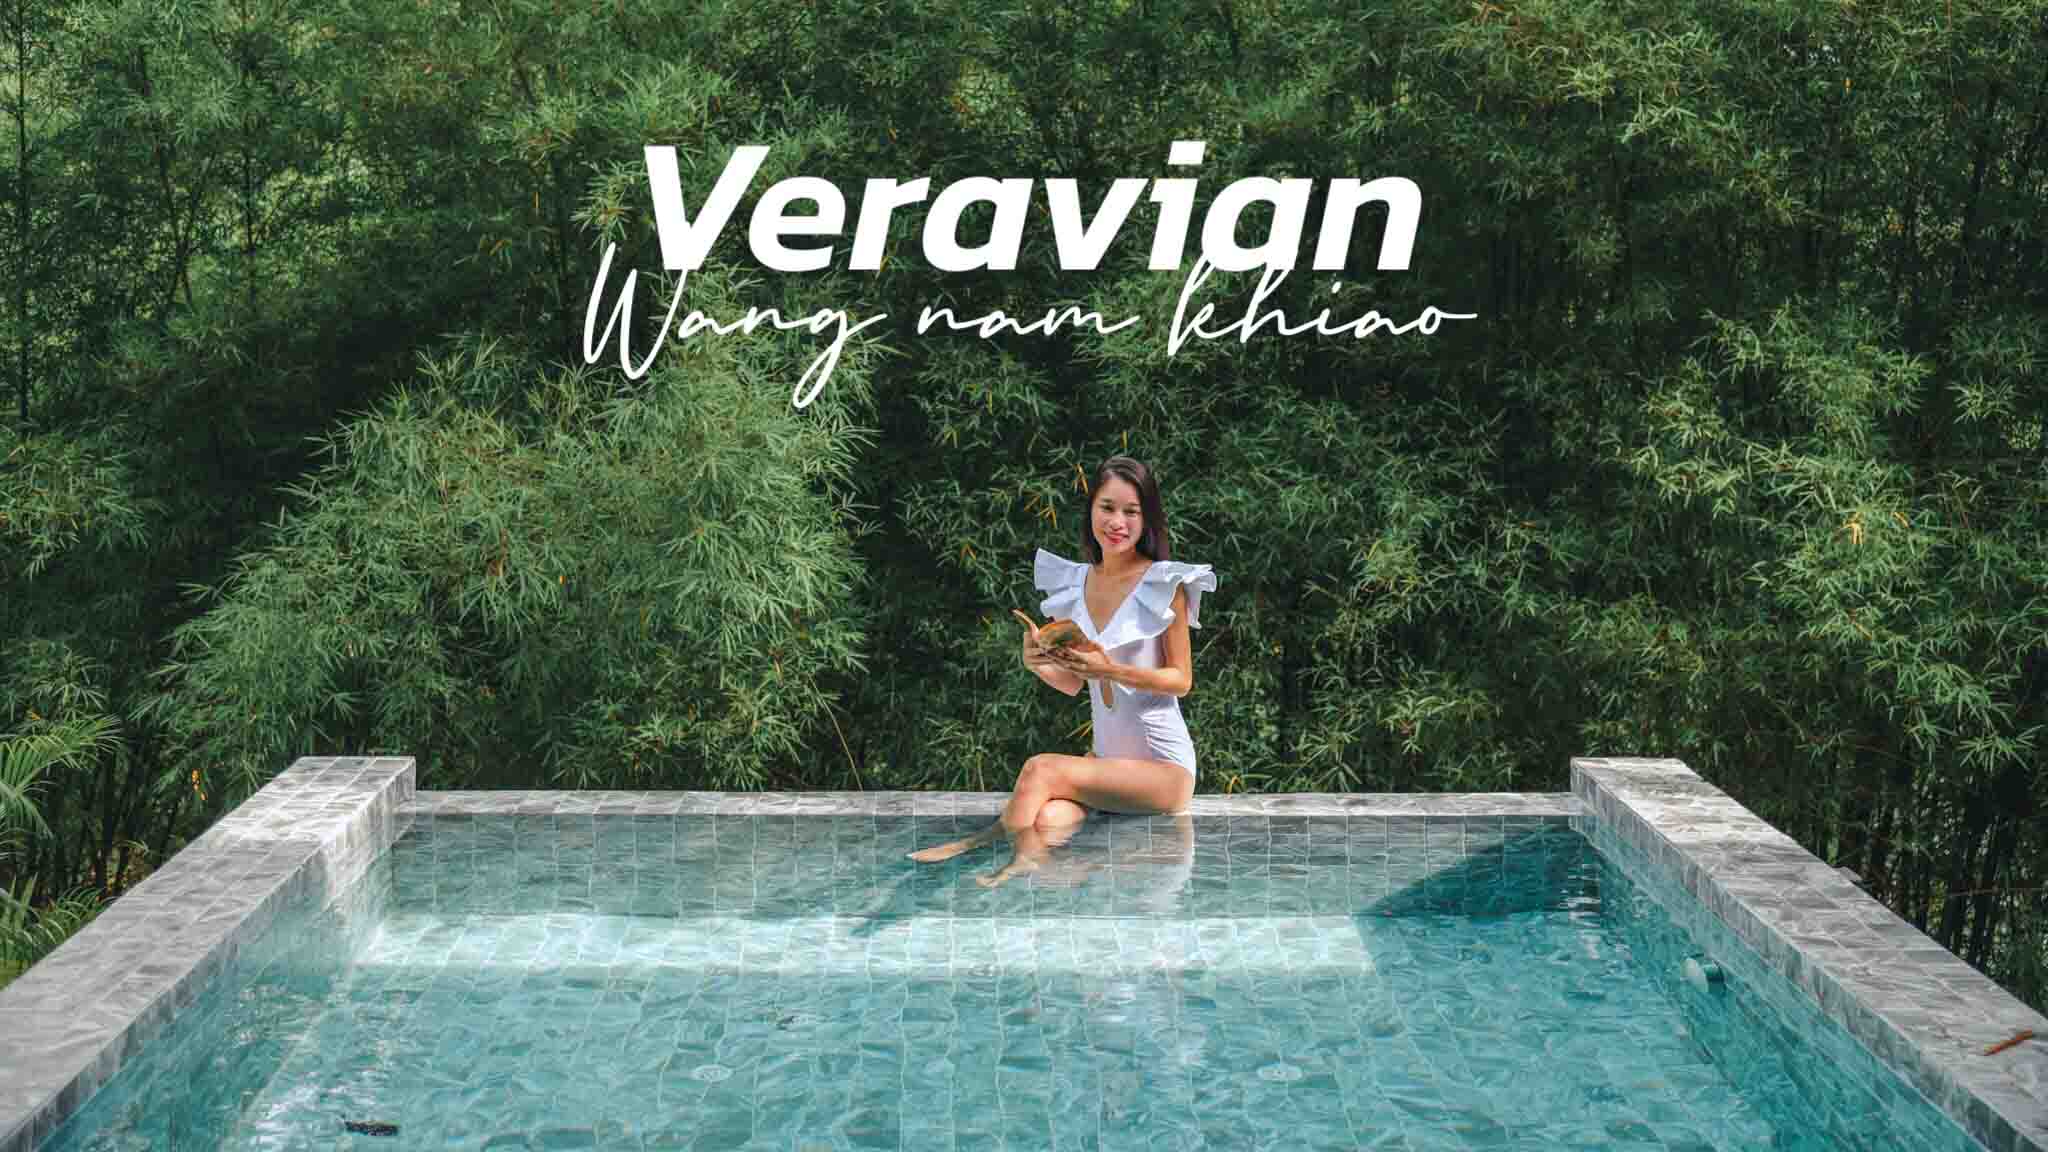 Veravian